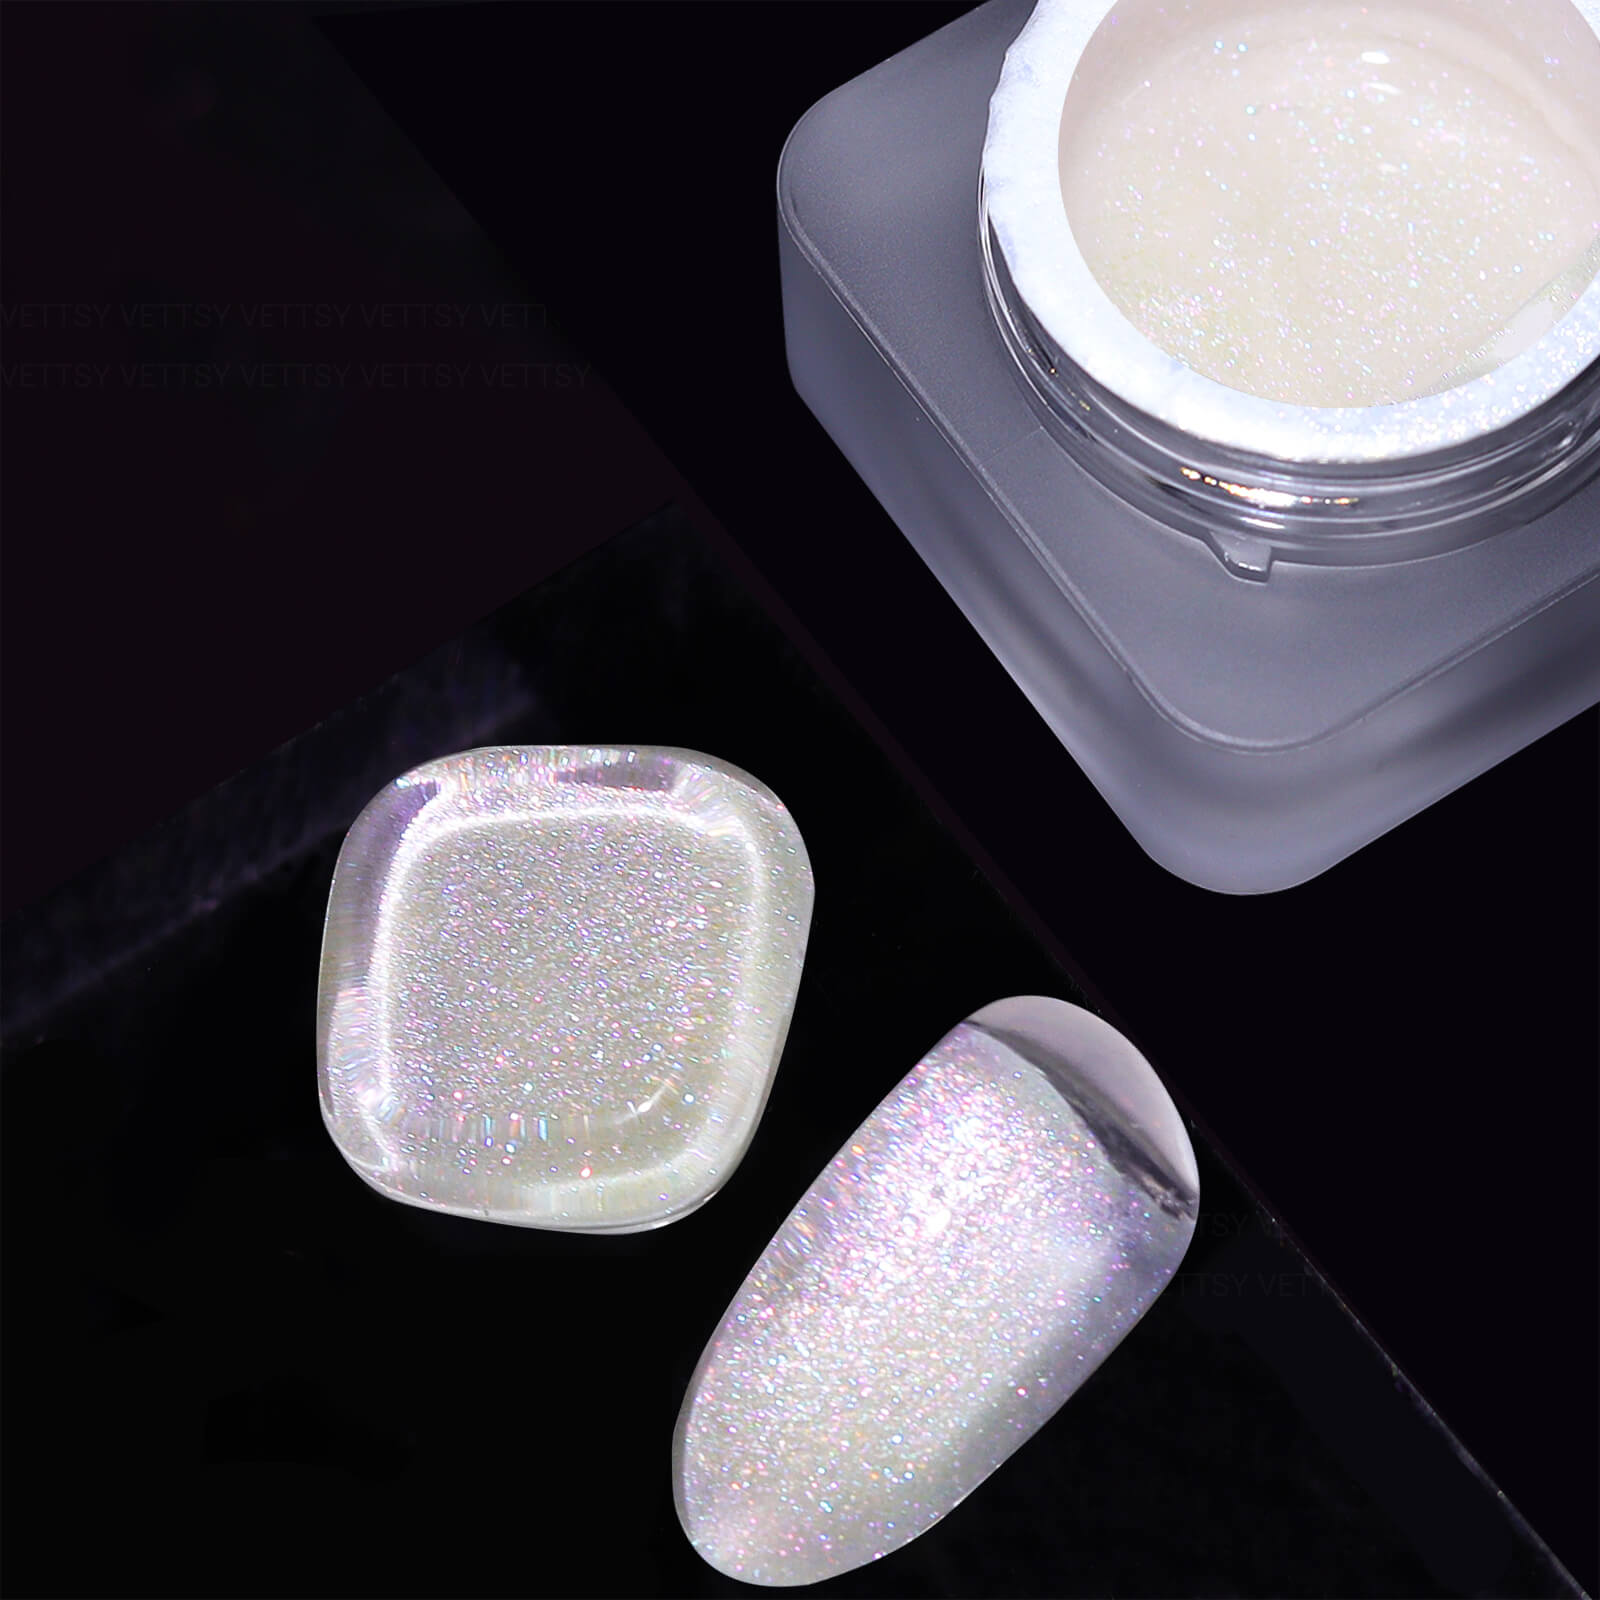 Vettsy Nail Glitters Set-Opal